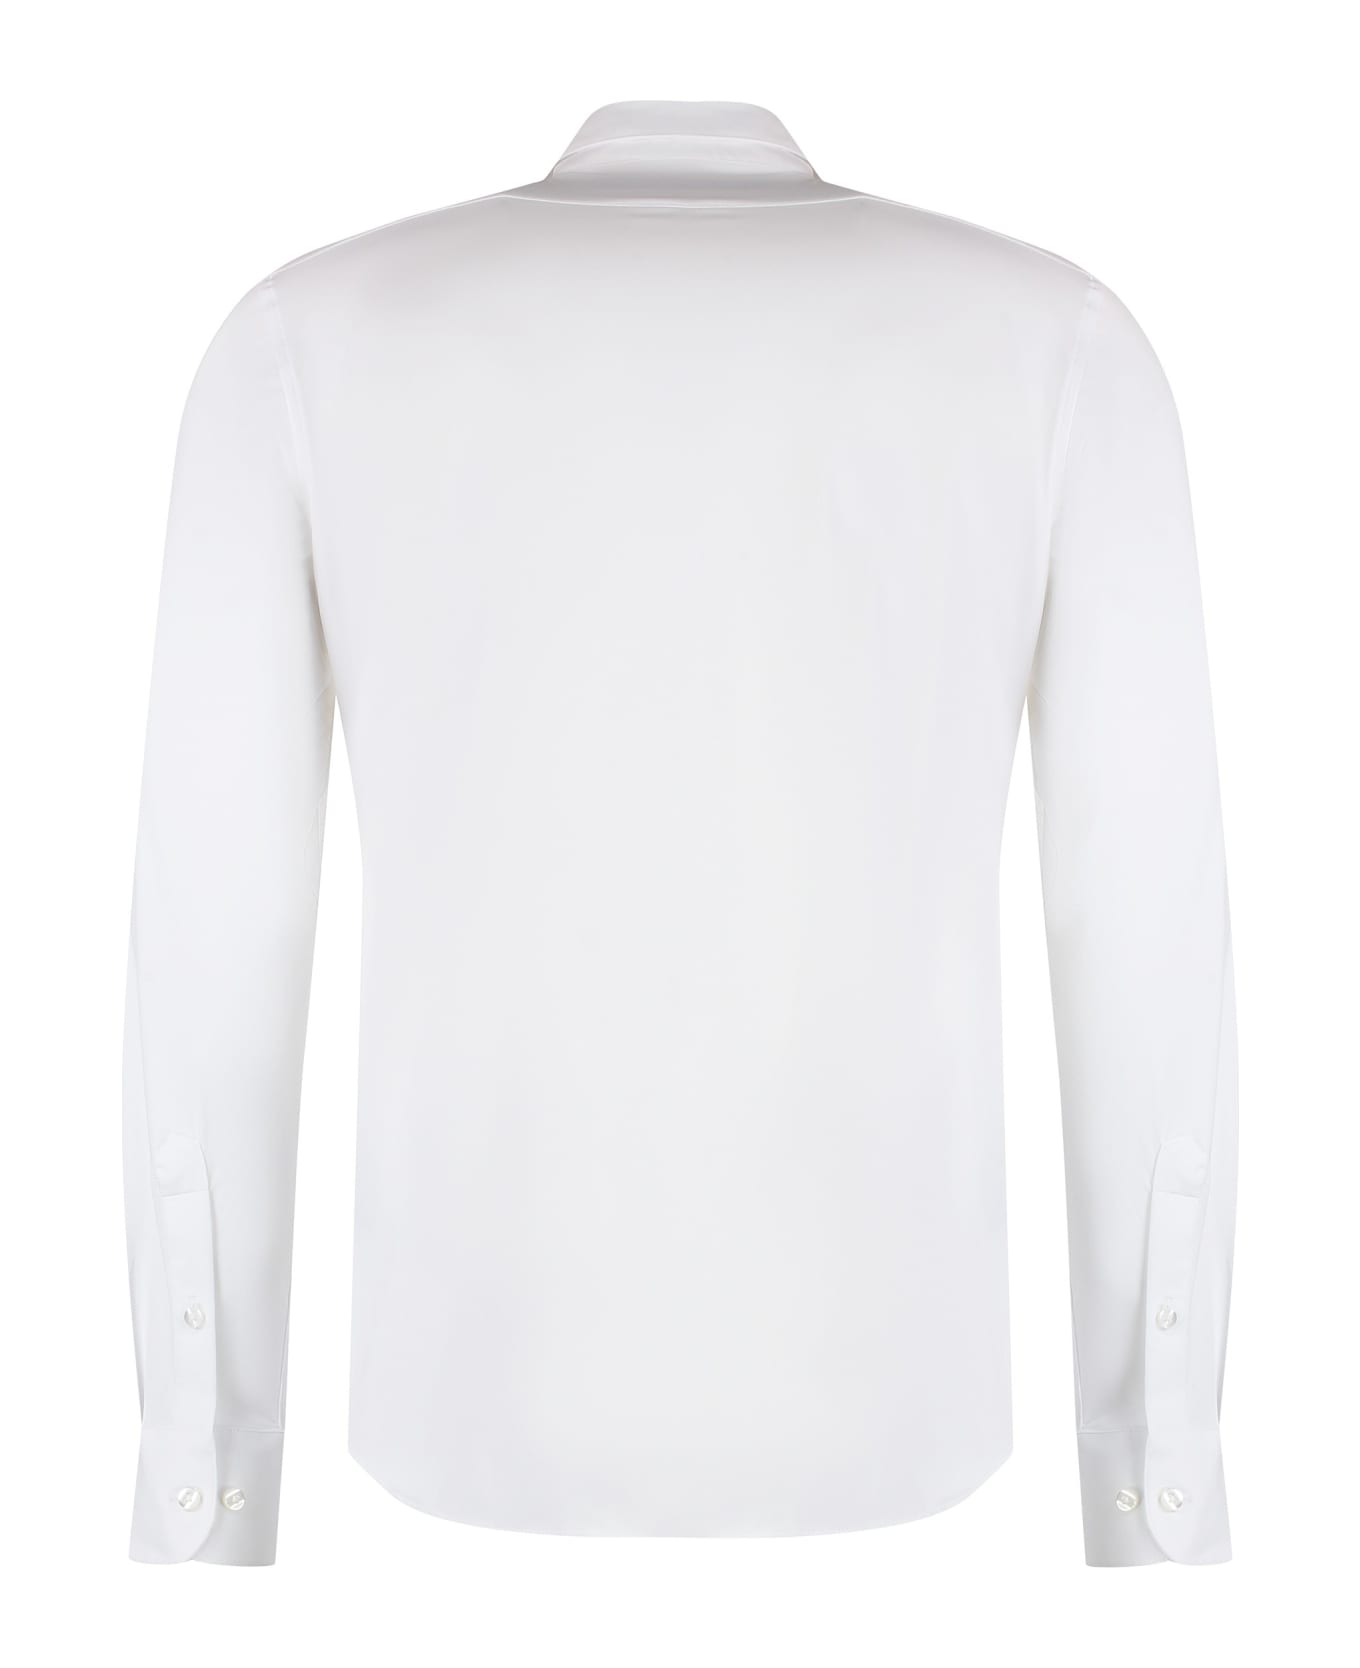 RRD - Roberto Ricci Design Technical Fabric Shirt - White